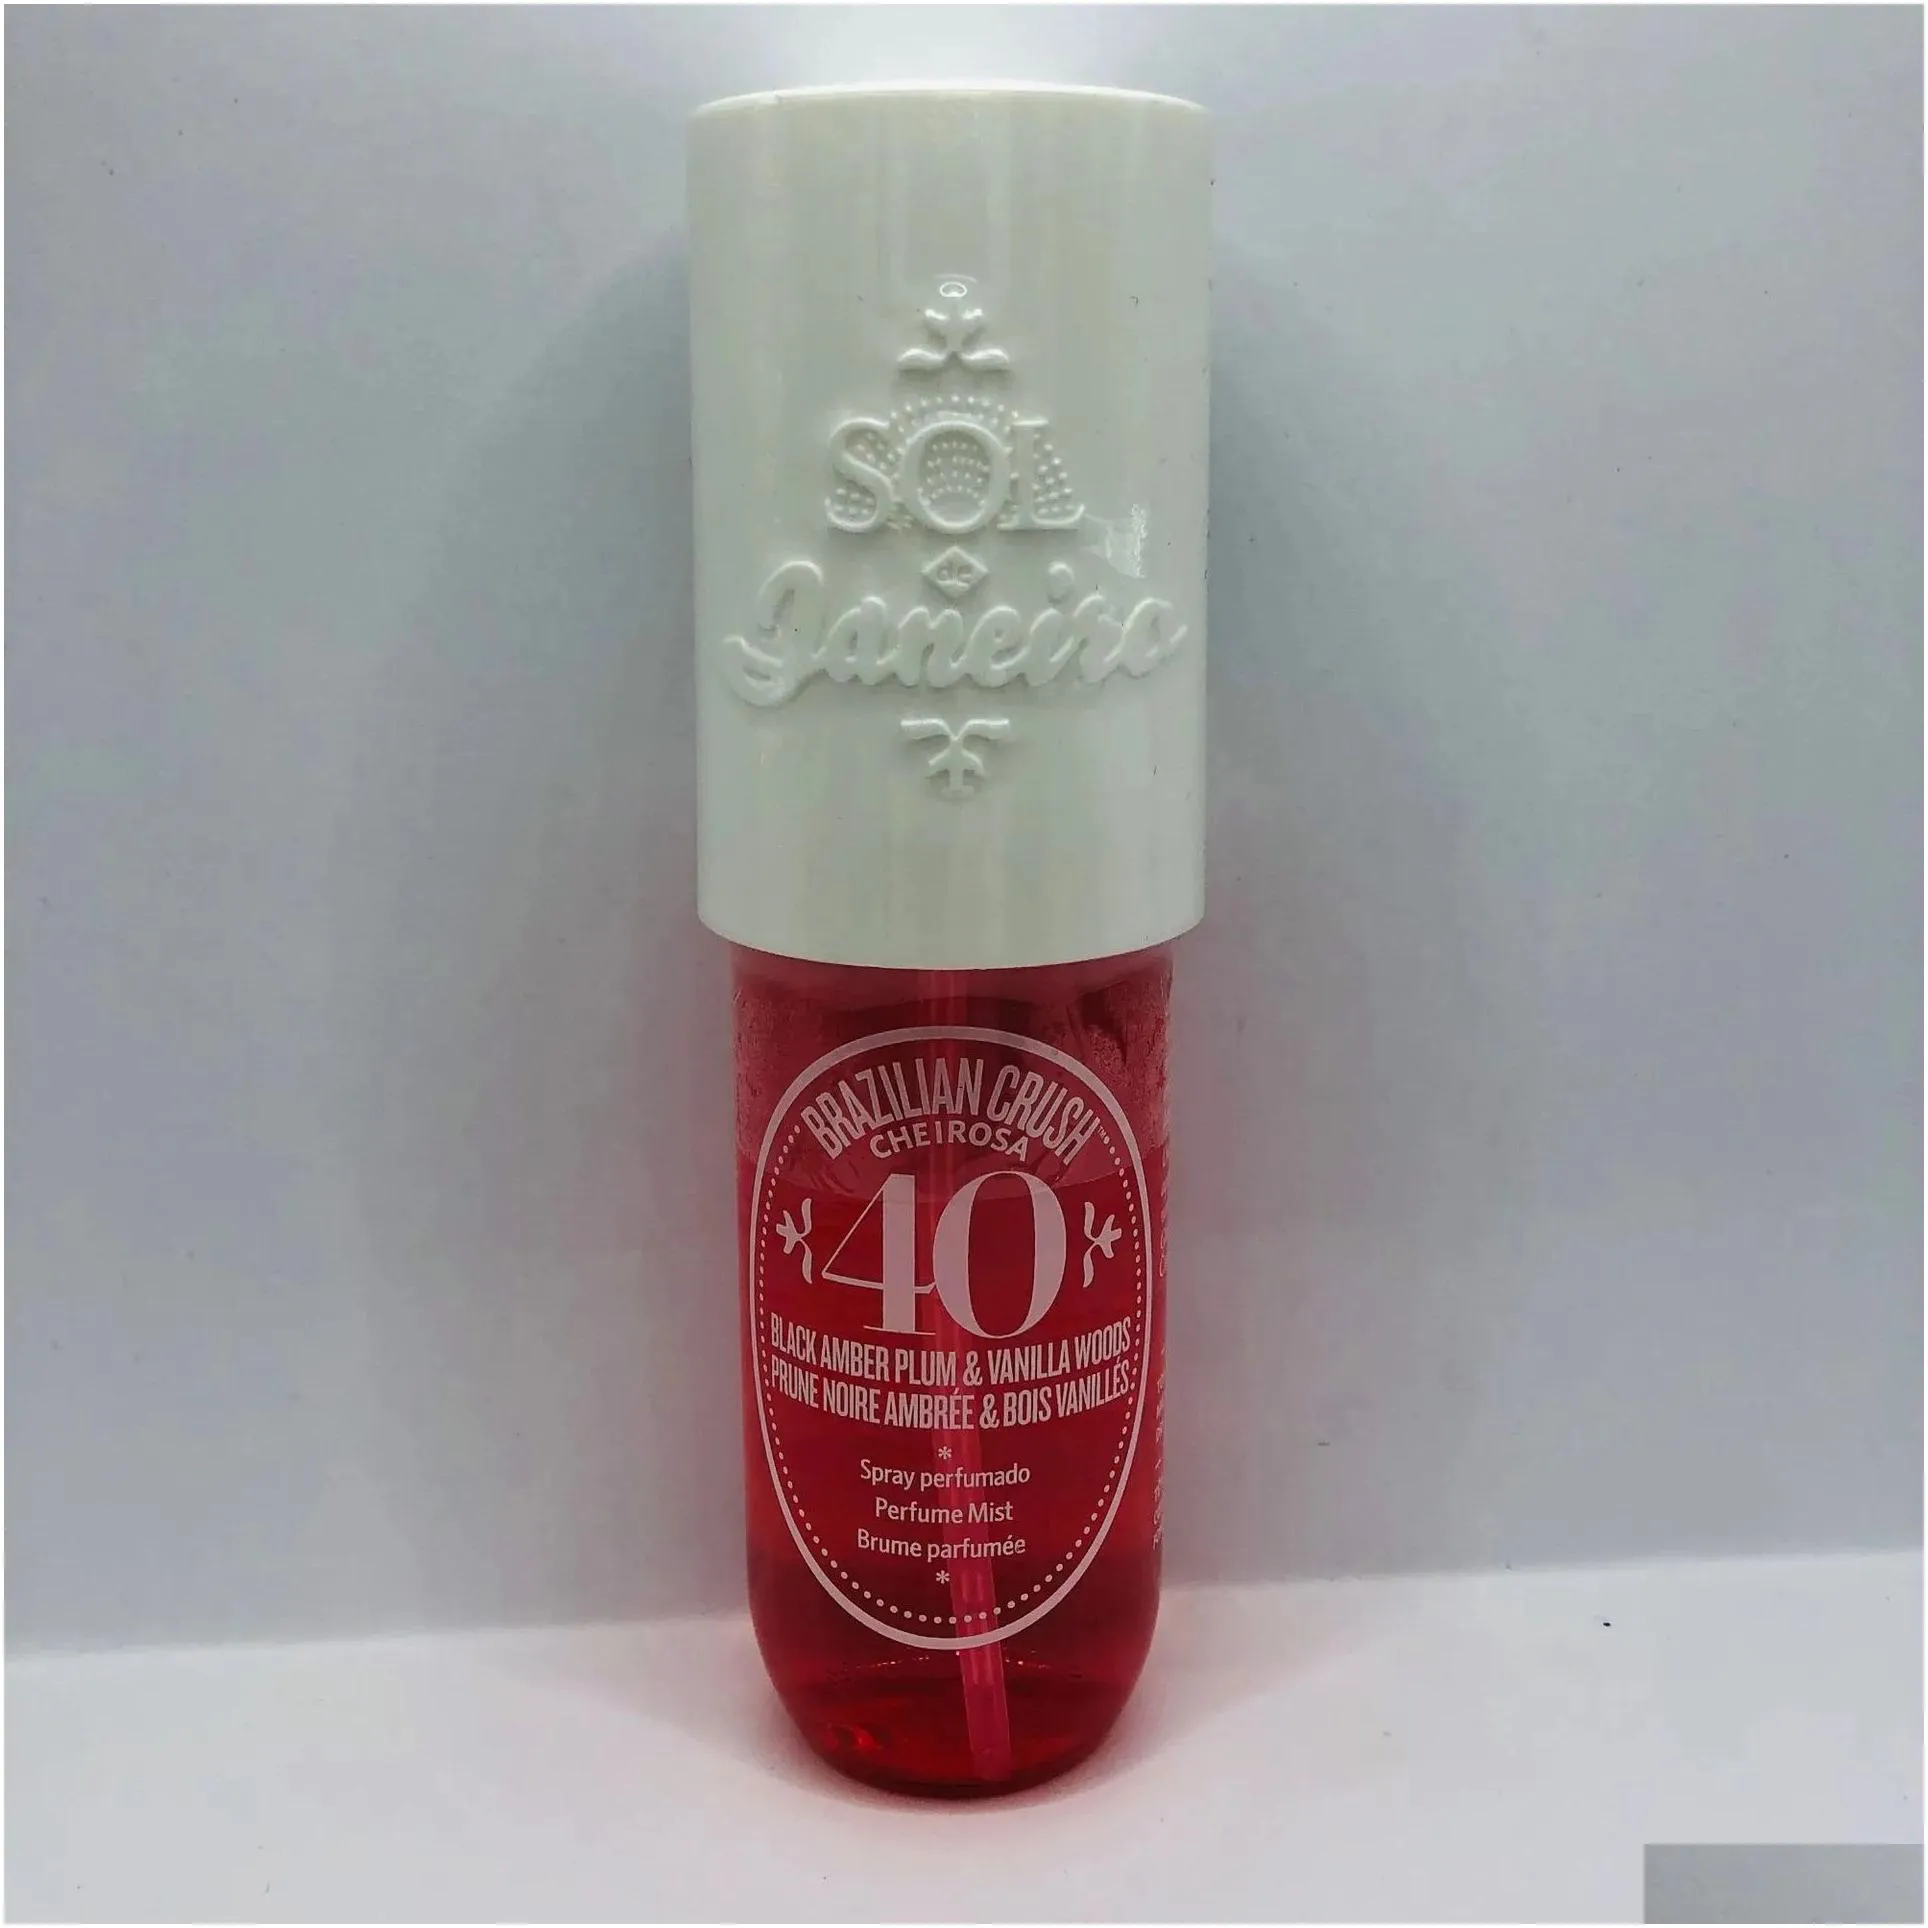 Brazilian Crush Body Fragrance Mist 90ml Perfume Spray Long Lasting Smell Man Women Body Parfum Deodorant Skin Care Makeup Incense